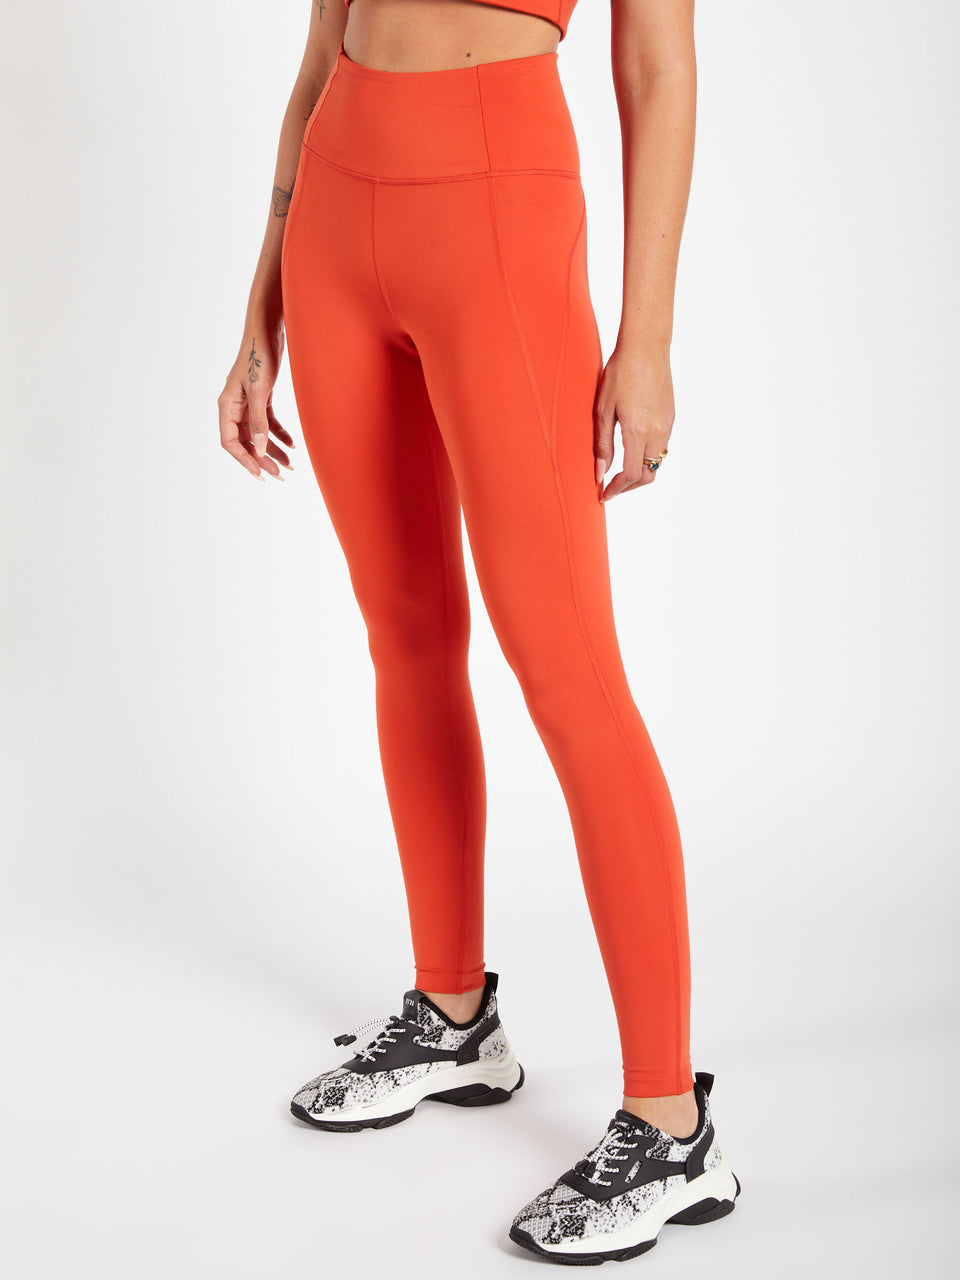 MICHI Women's Velocity Pocket Leggings, Fire Orange/Ivory, XS at   Women's Clothing store